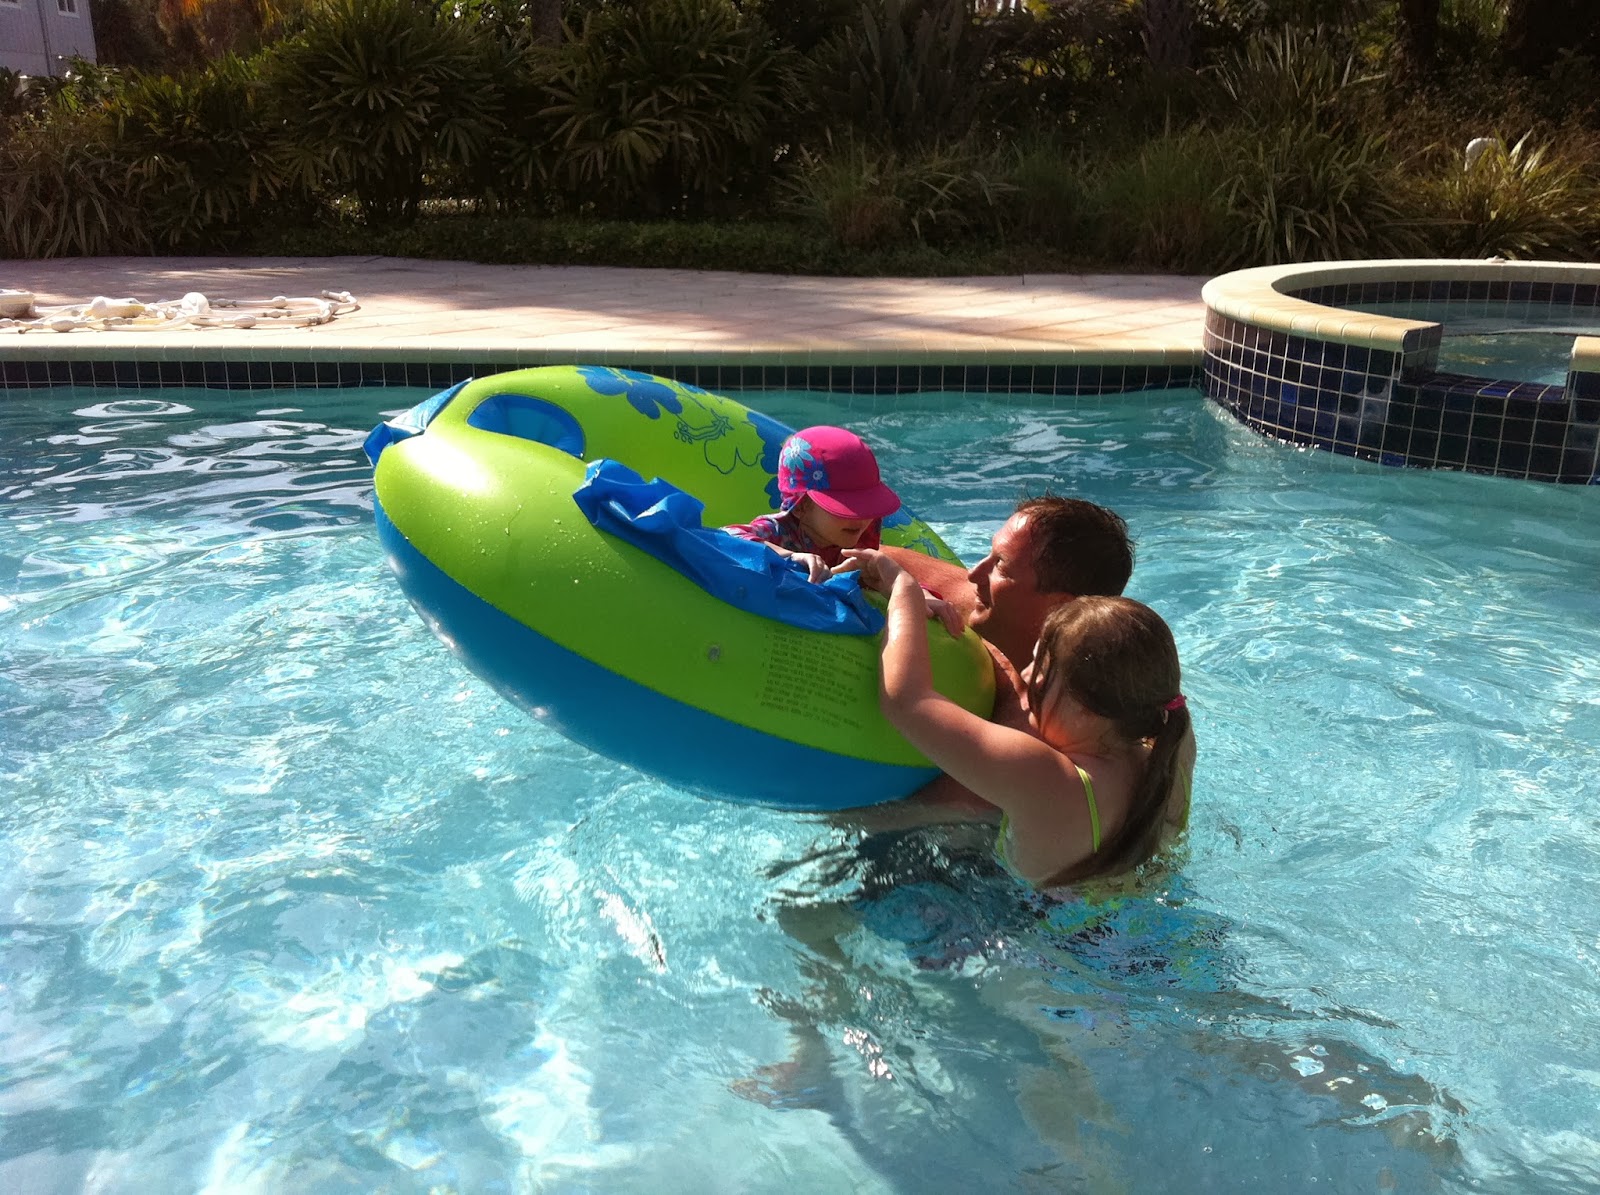 Cherryfish Villa - Swimming Pool with the Kids